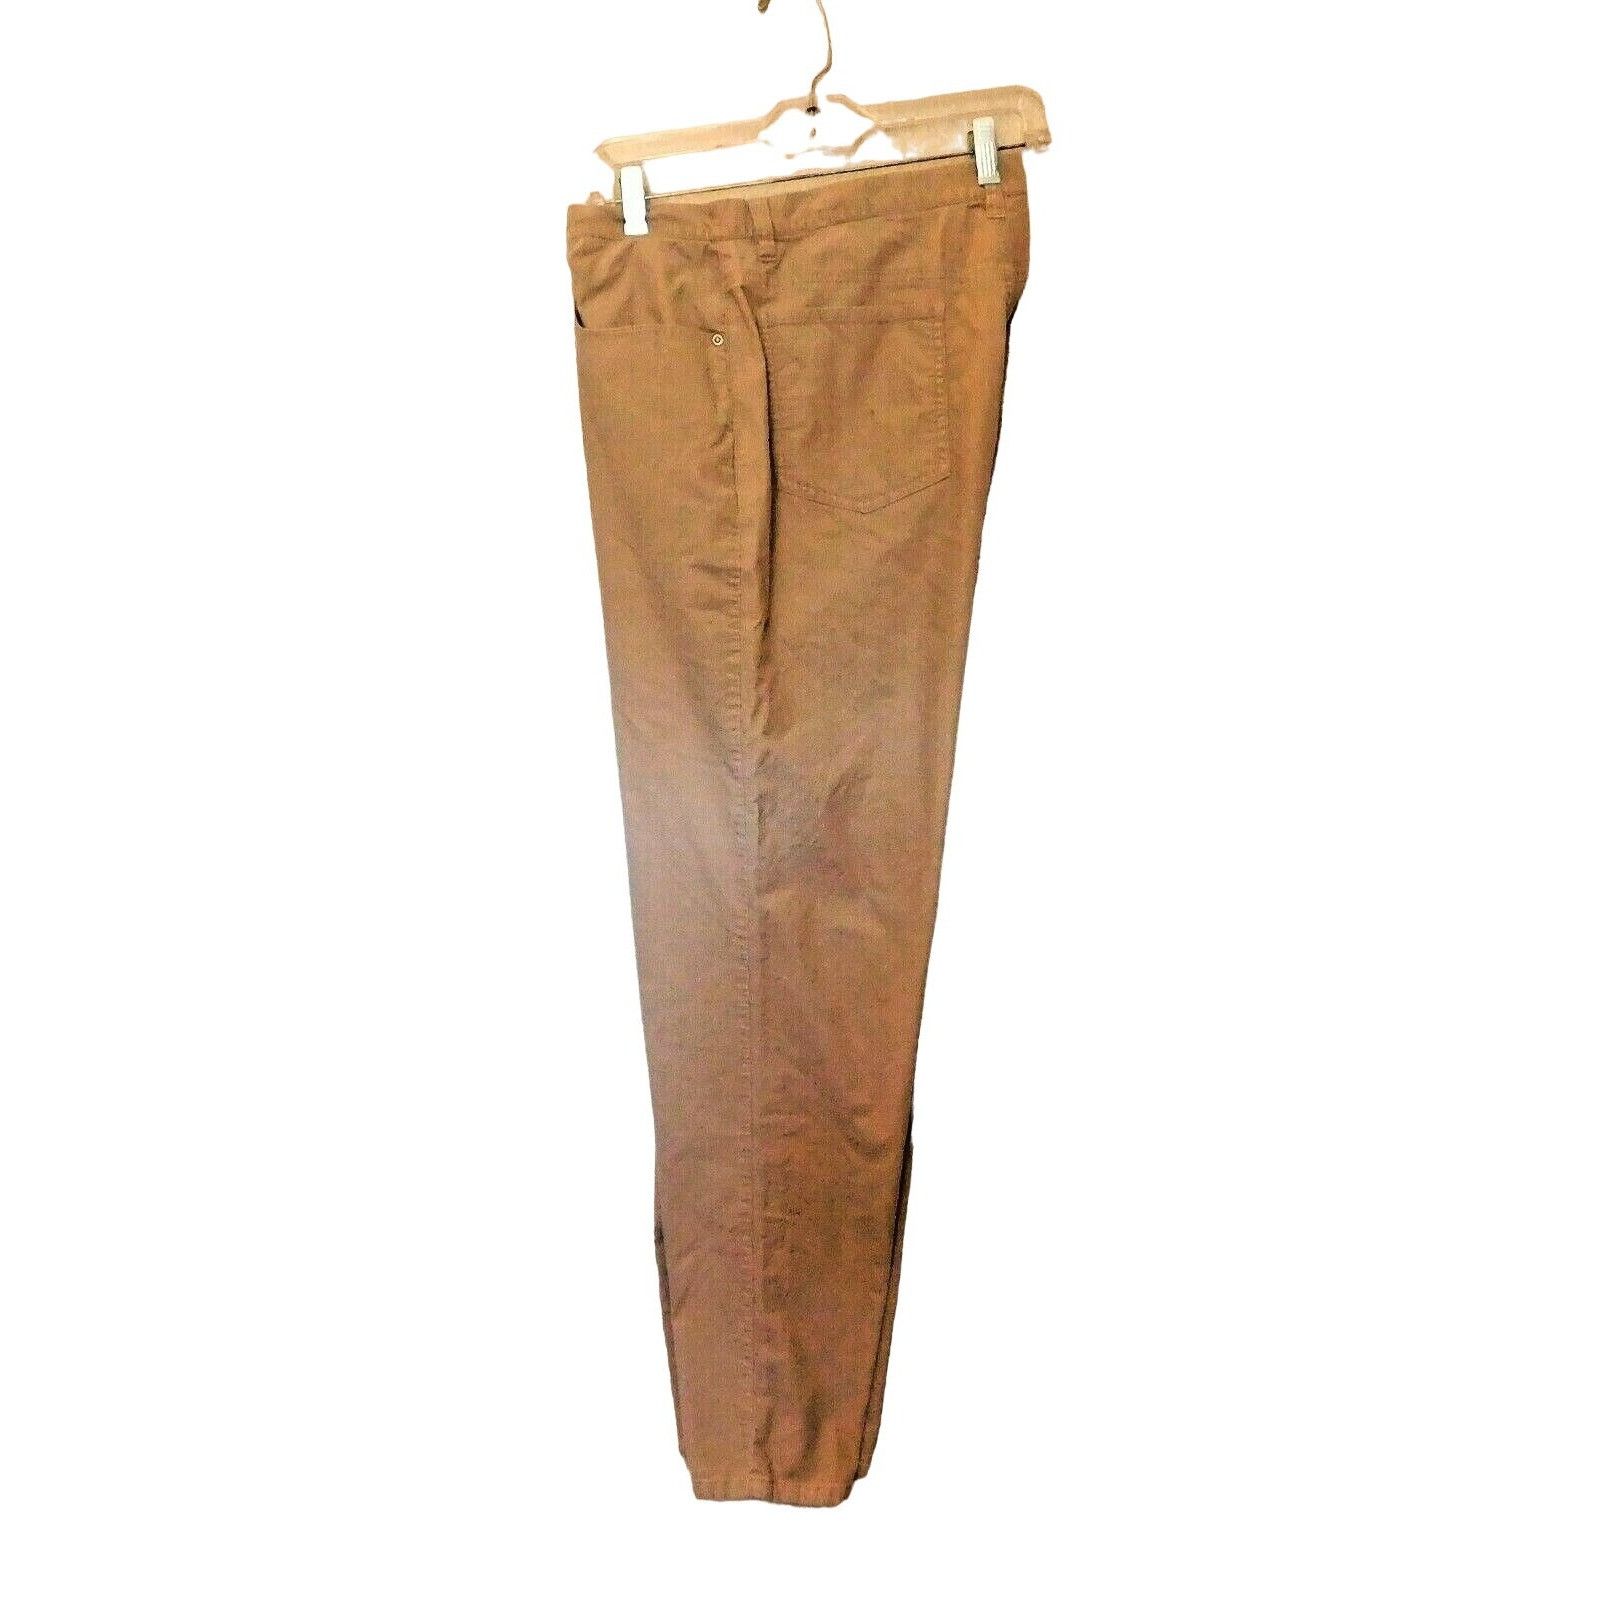 Chicos Chico's Design 2.5 Corduroy Pants L 14 Tan Straight Leg Size 36" / US 14 / IT 50 - 2 Preview